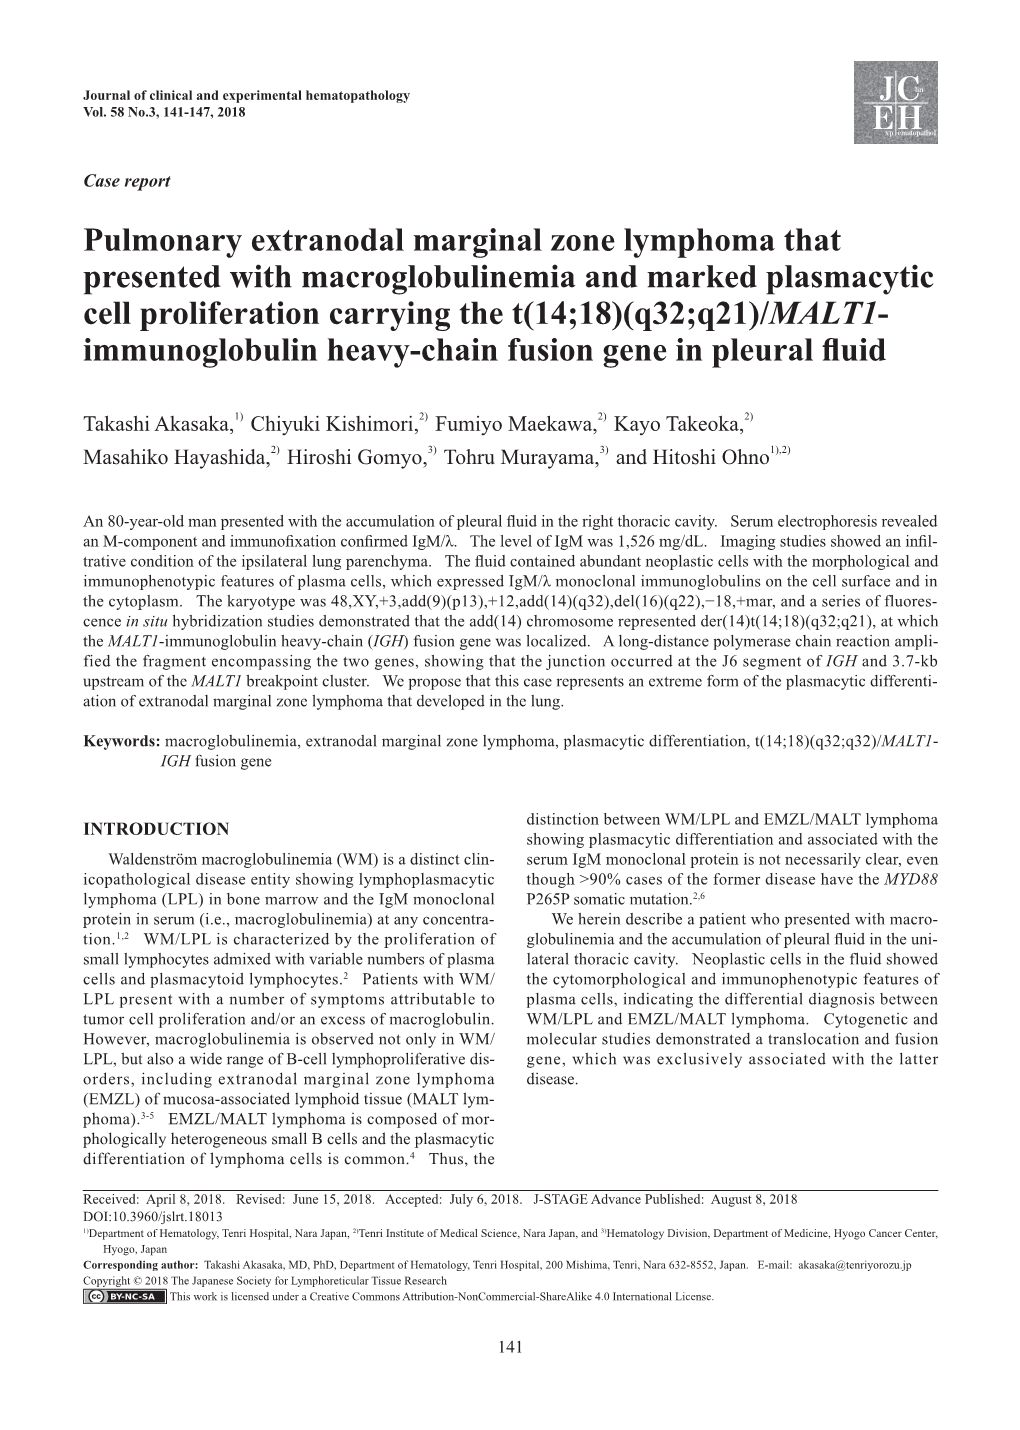 Pulmonary Extranodal Marginal Zone Lymphoma That Presented